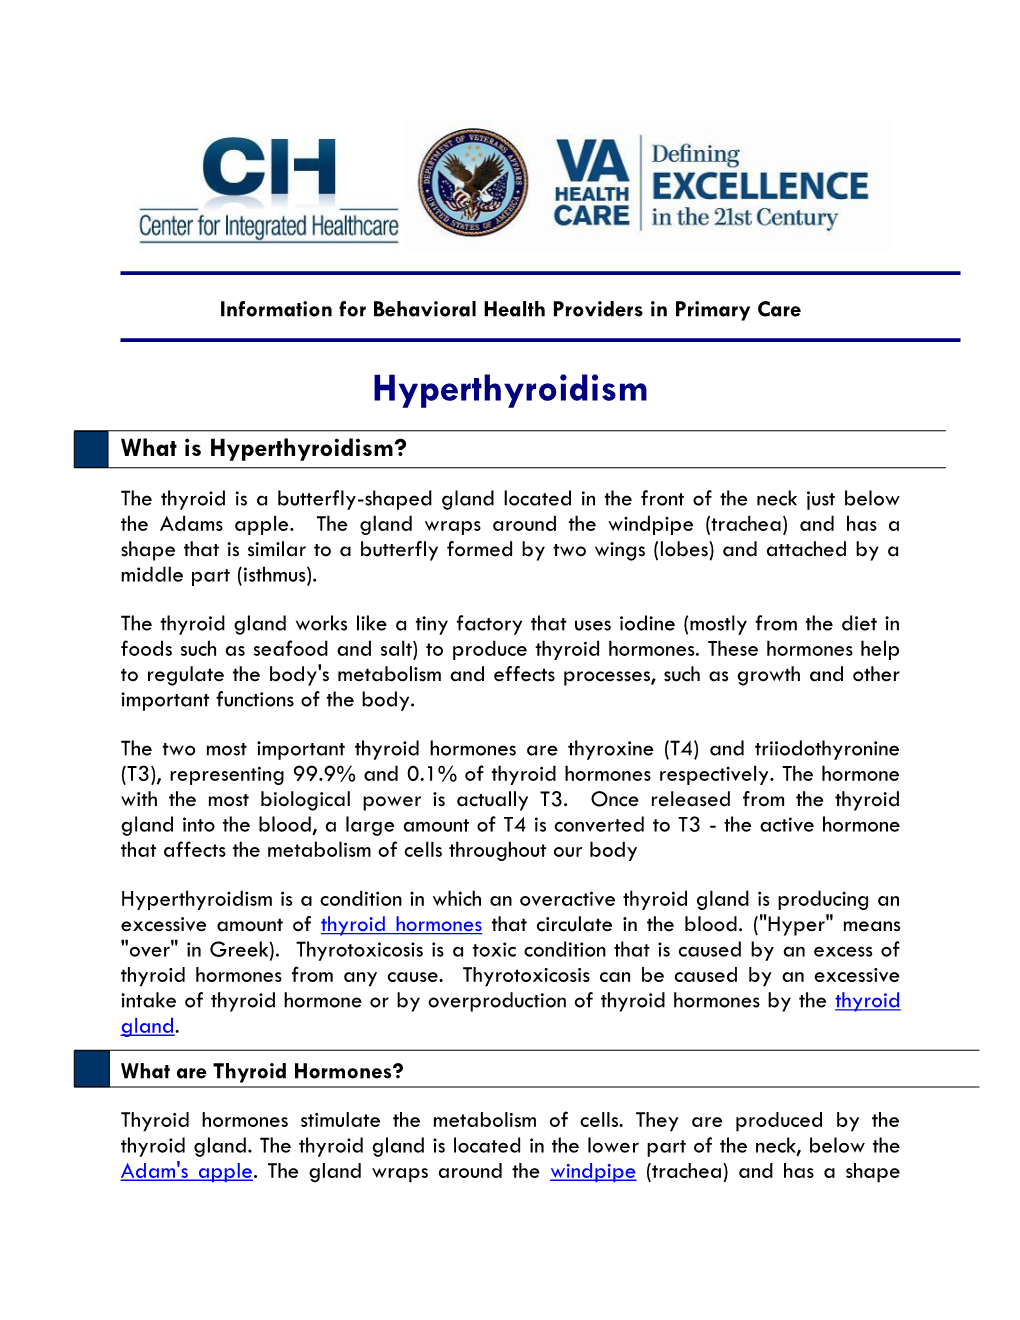 Hyperthyroidism Information Sheet for Bhps